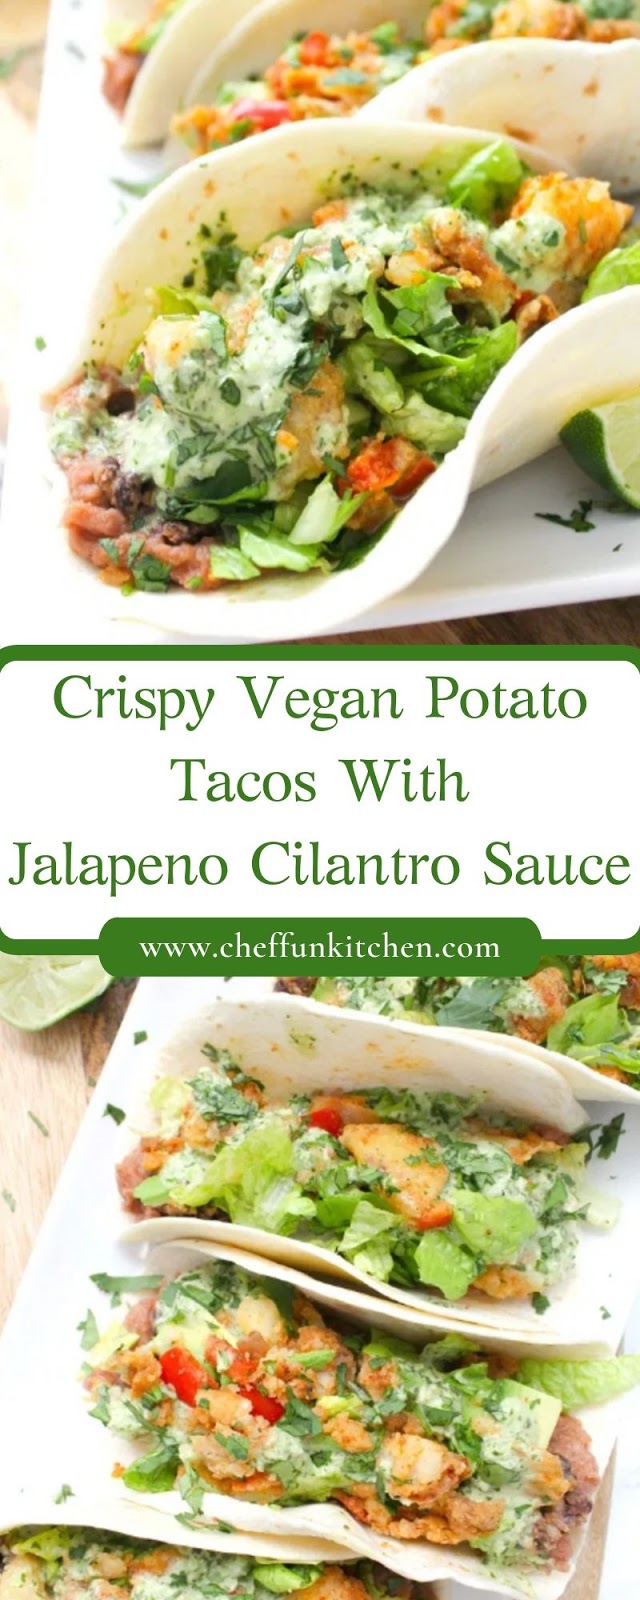 Crispy Vegan Potato Tacos With Jalapeno Cilantro Sauce